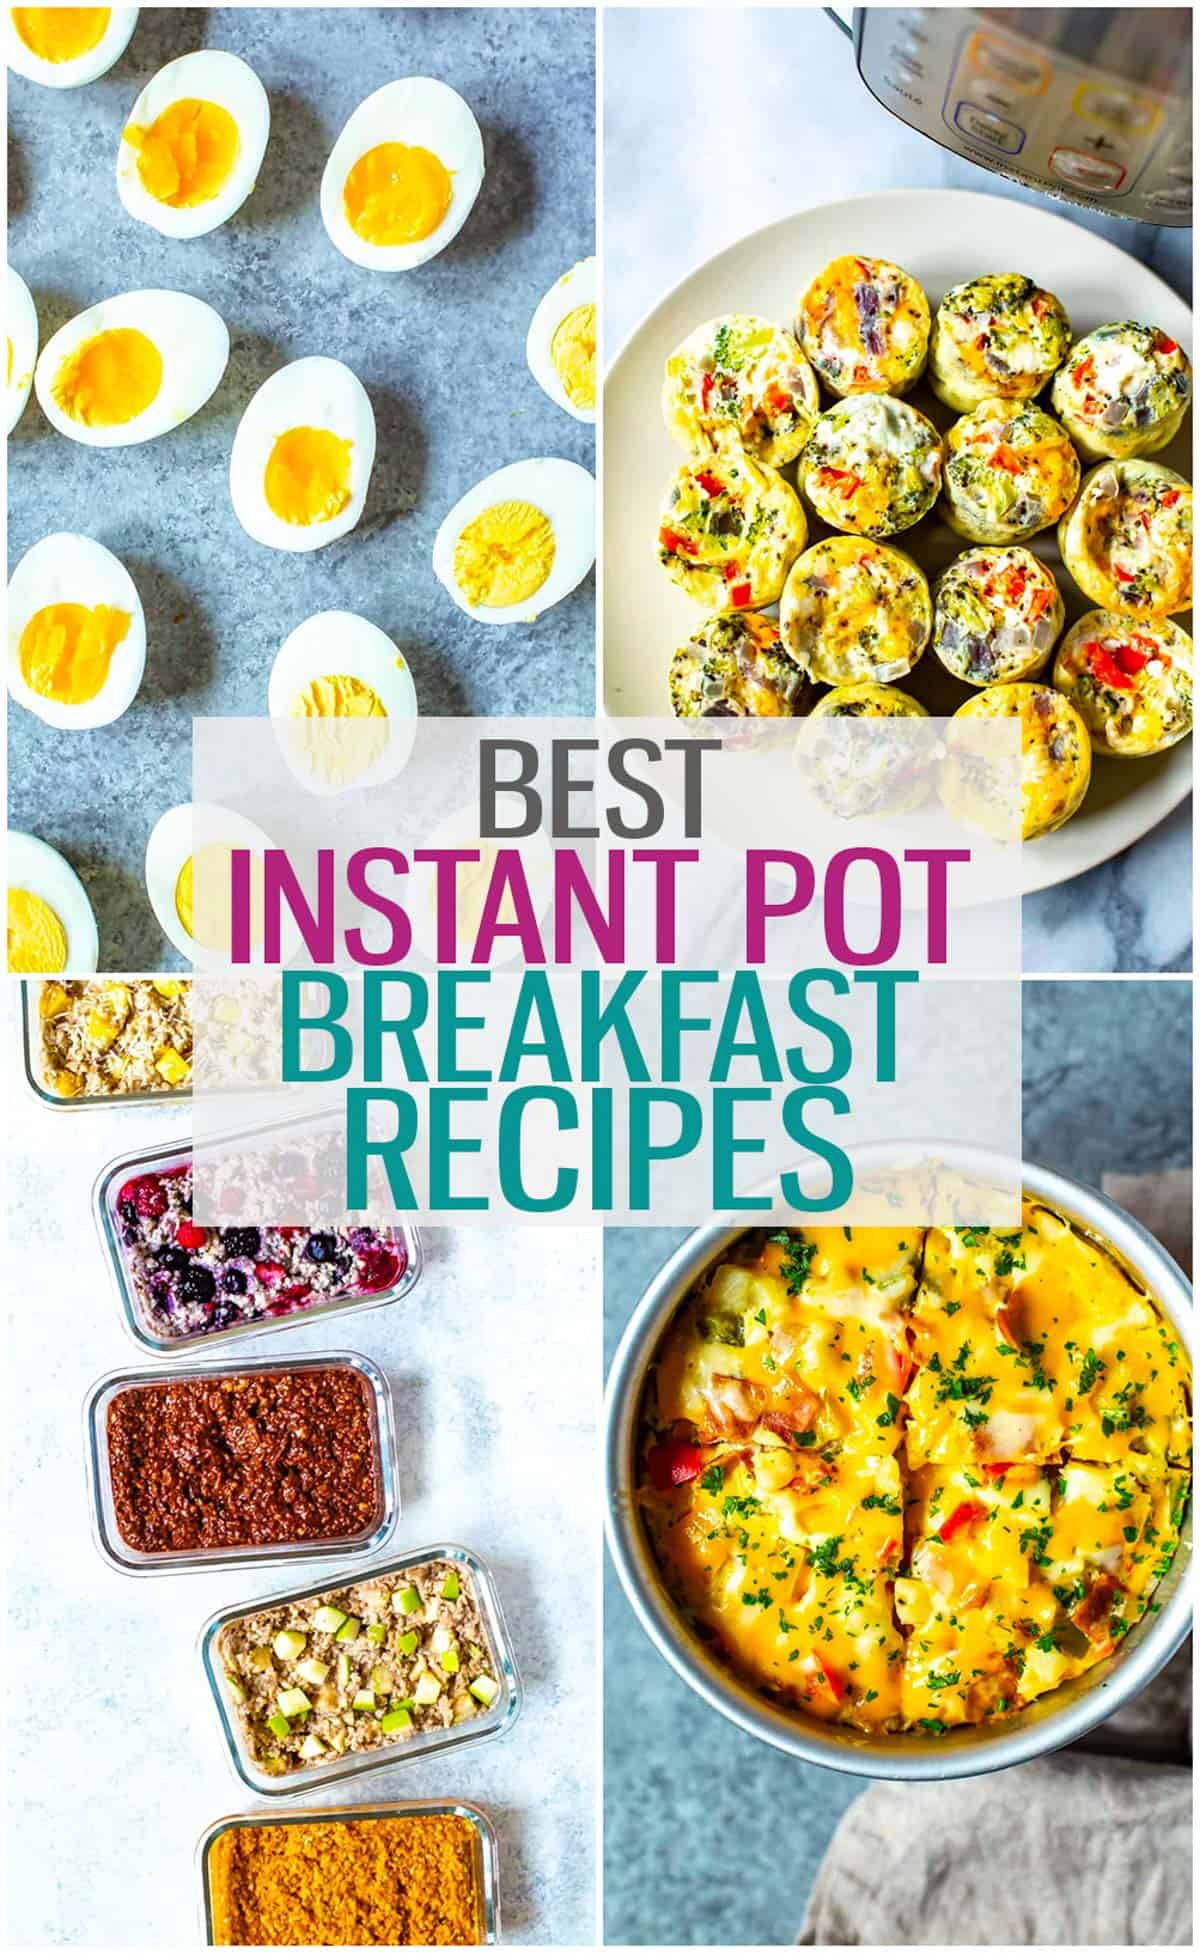 https://eatinginstantly.com/wp-content/uploads/2023/01/instant-pot-breakfast-recipes-collage.jpg